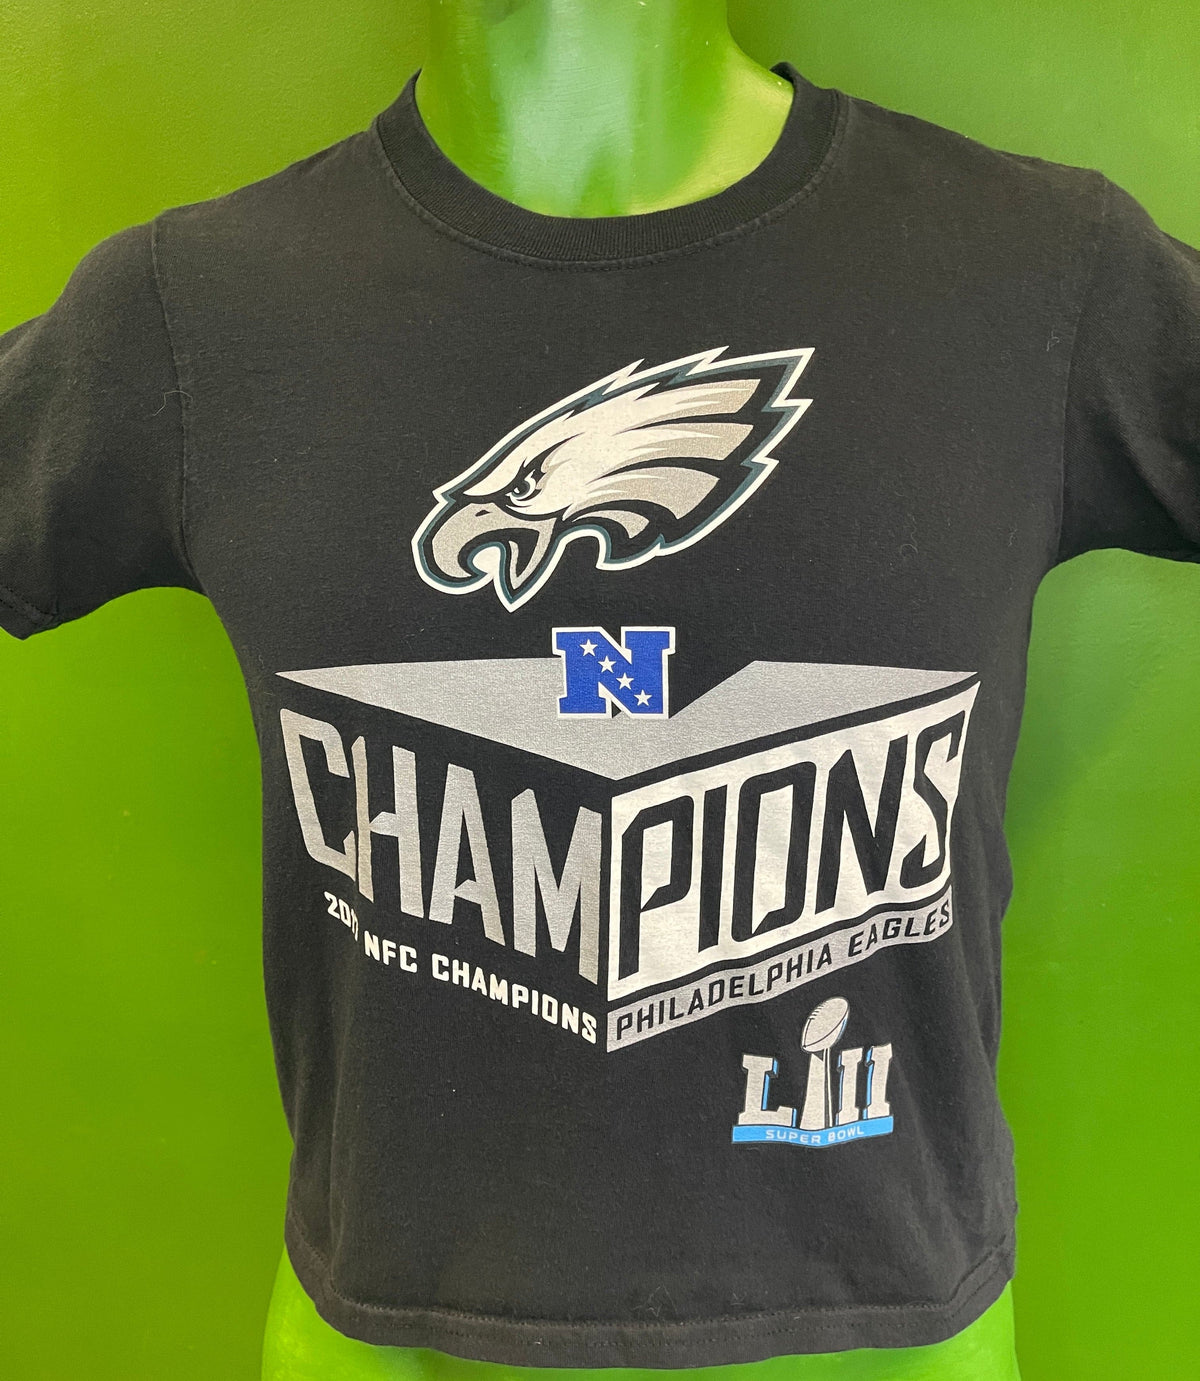 NFL Philadelphia Eagles Fanatics 2017 NFC Champions Super Bowl LII Sparkly Girls' T-Shirt Youth Small 8